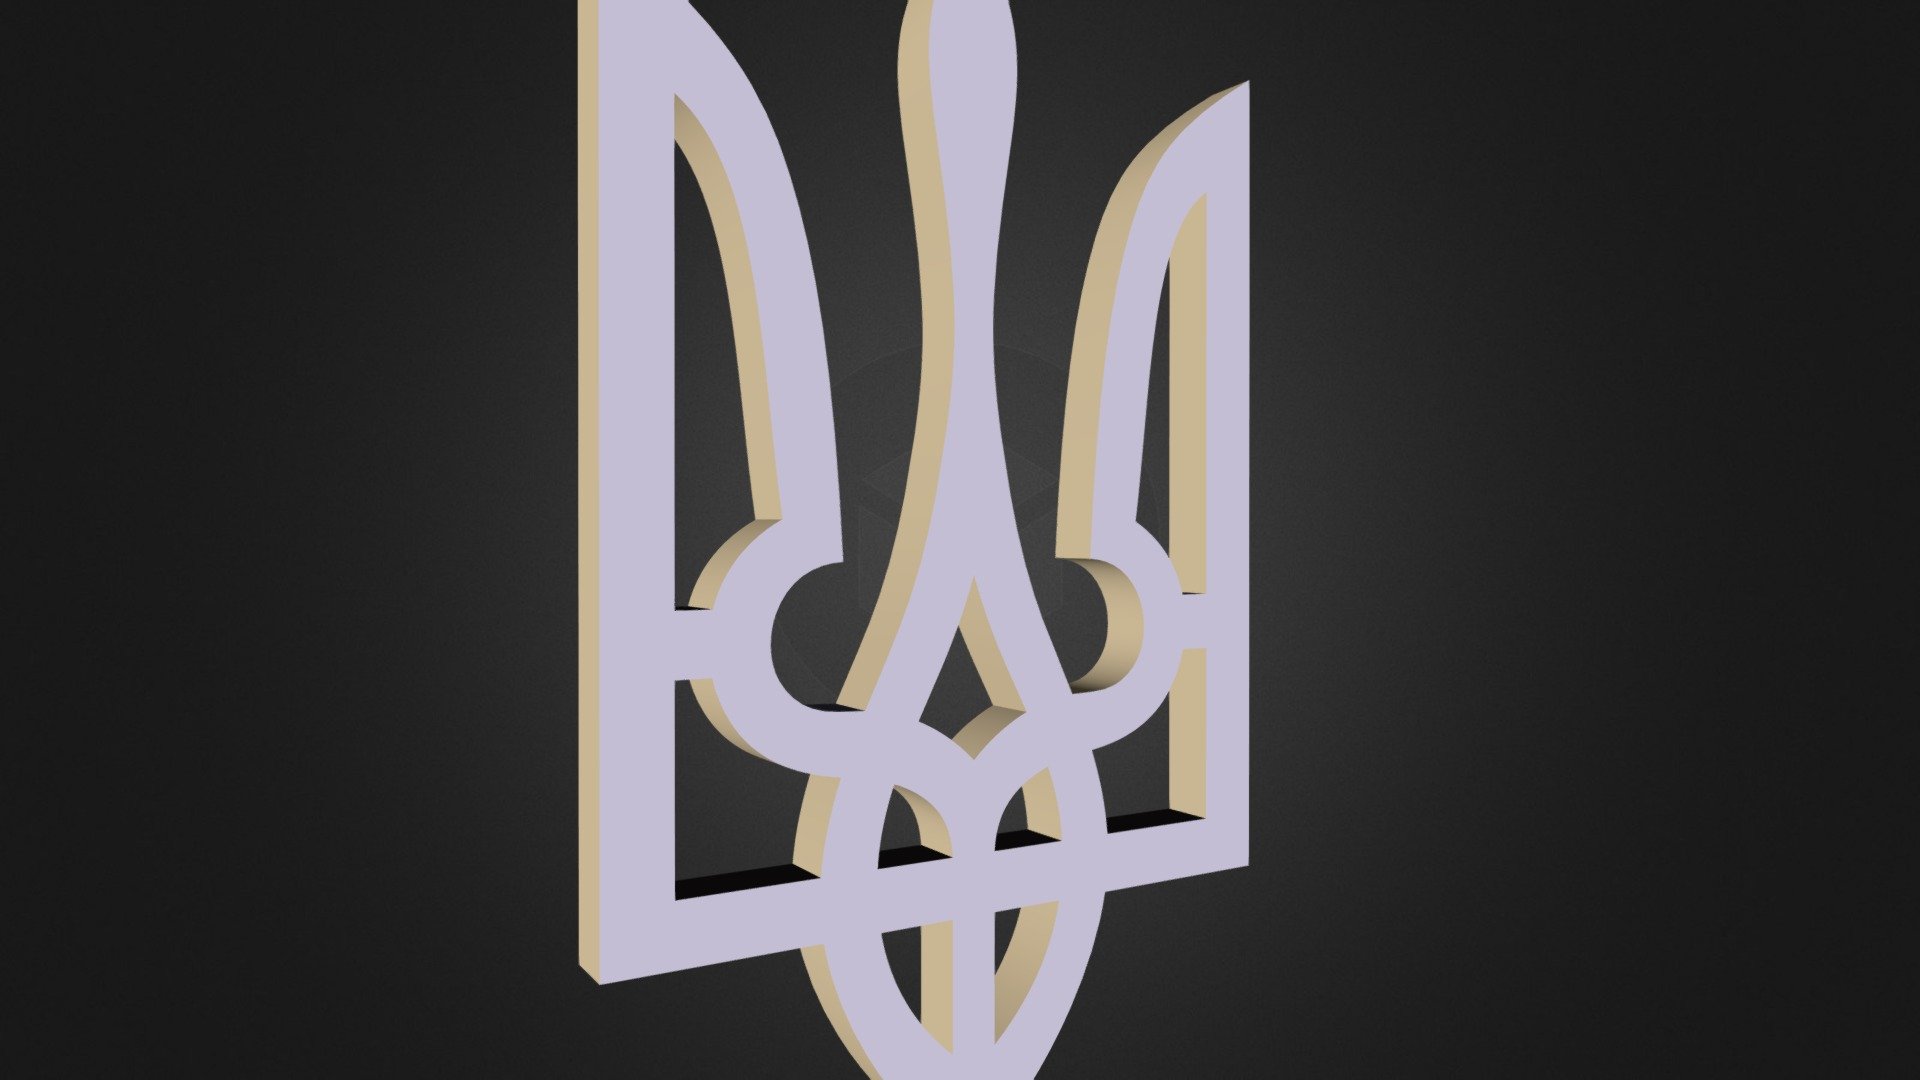 Ukraine National Emblem - trident